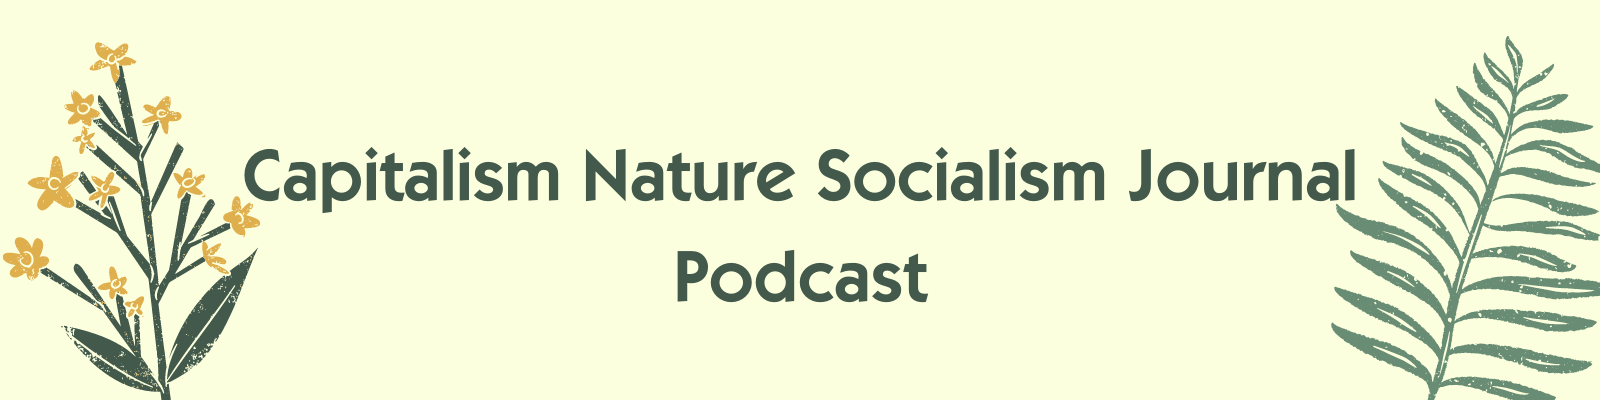 Capitalism Nature Socialism Journal Podcast